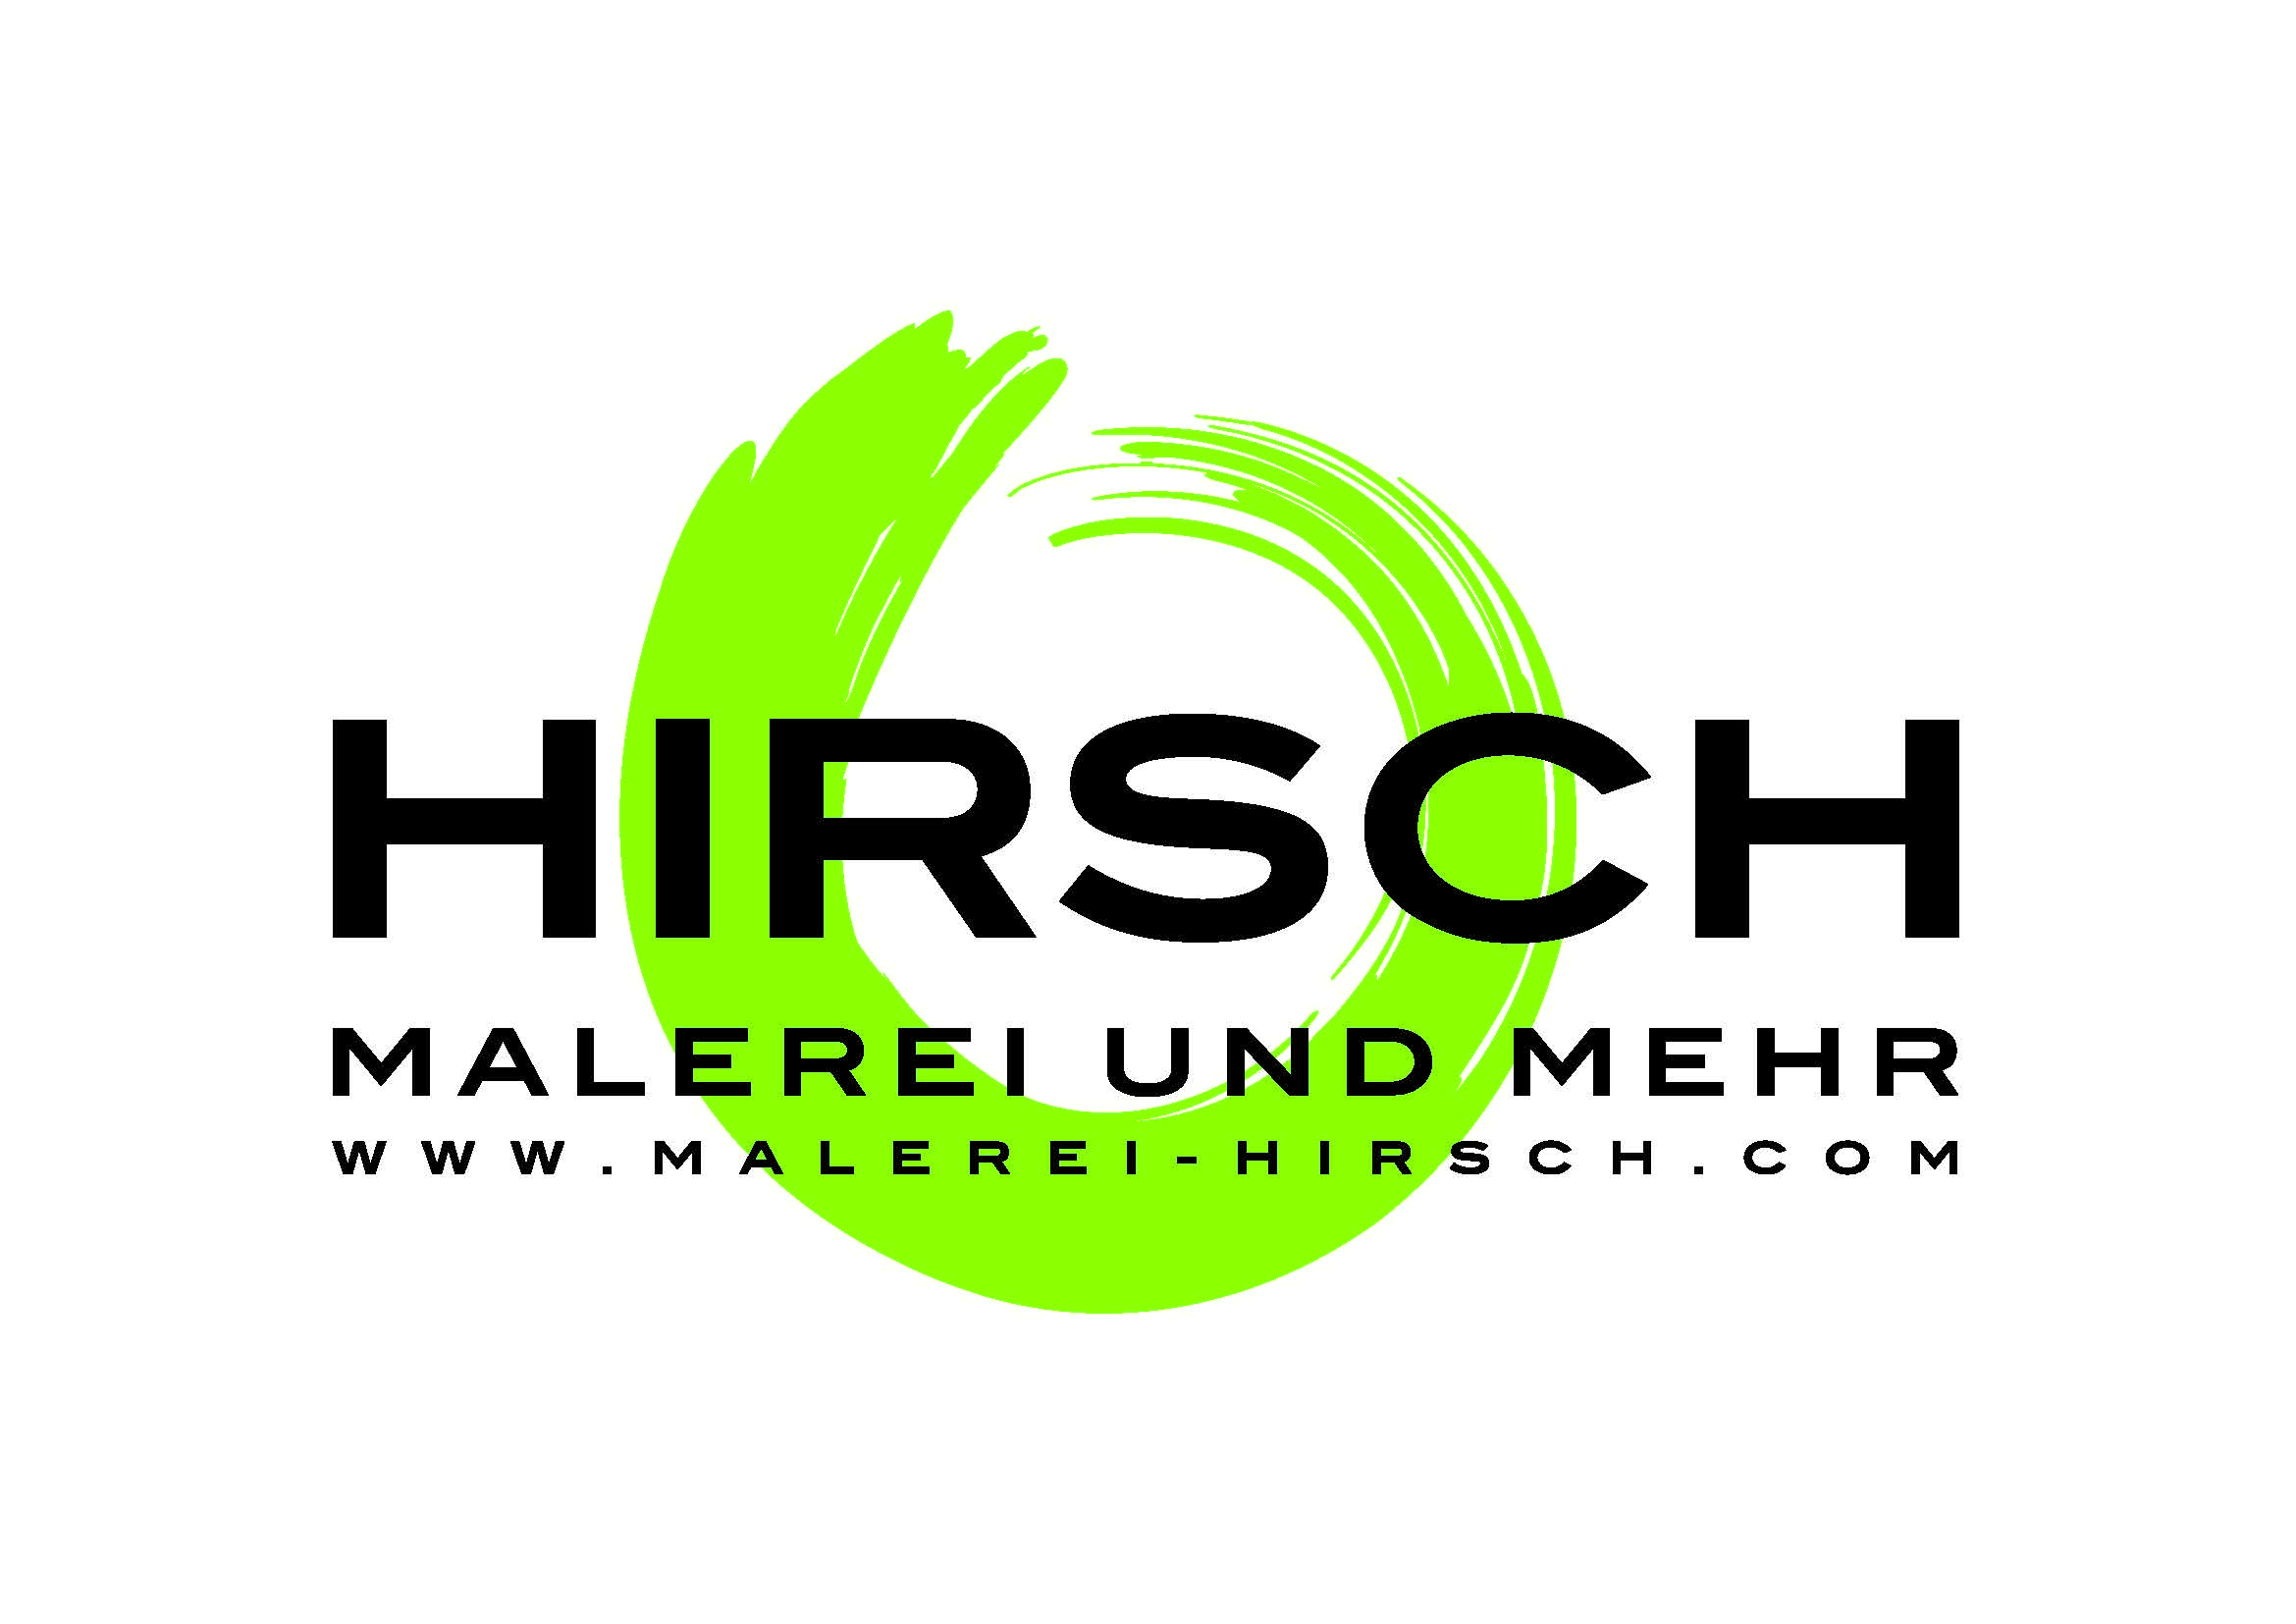 guschlbauer_back_logo